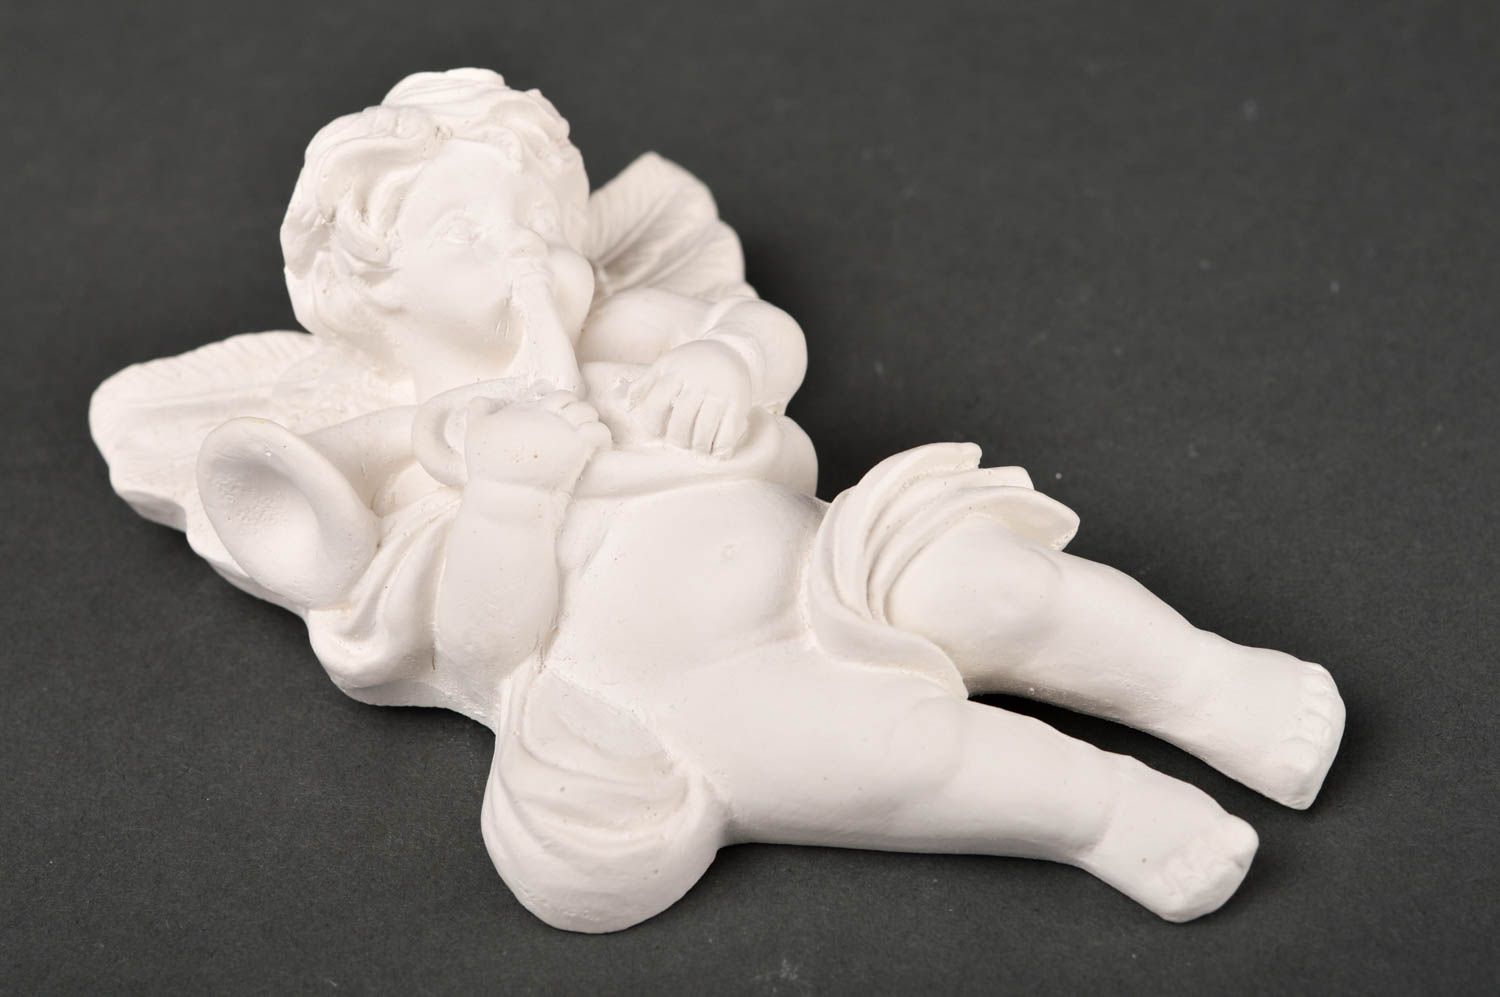 Unusual handmade plaster blank figurine art materials sculpture art small gifts photo 2